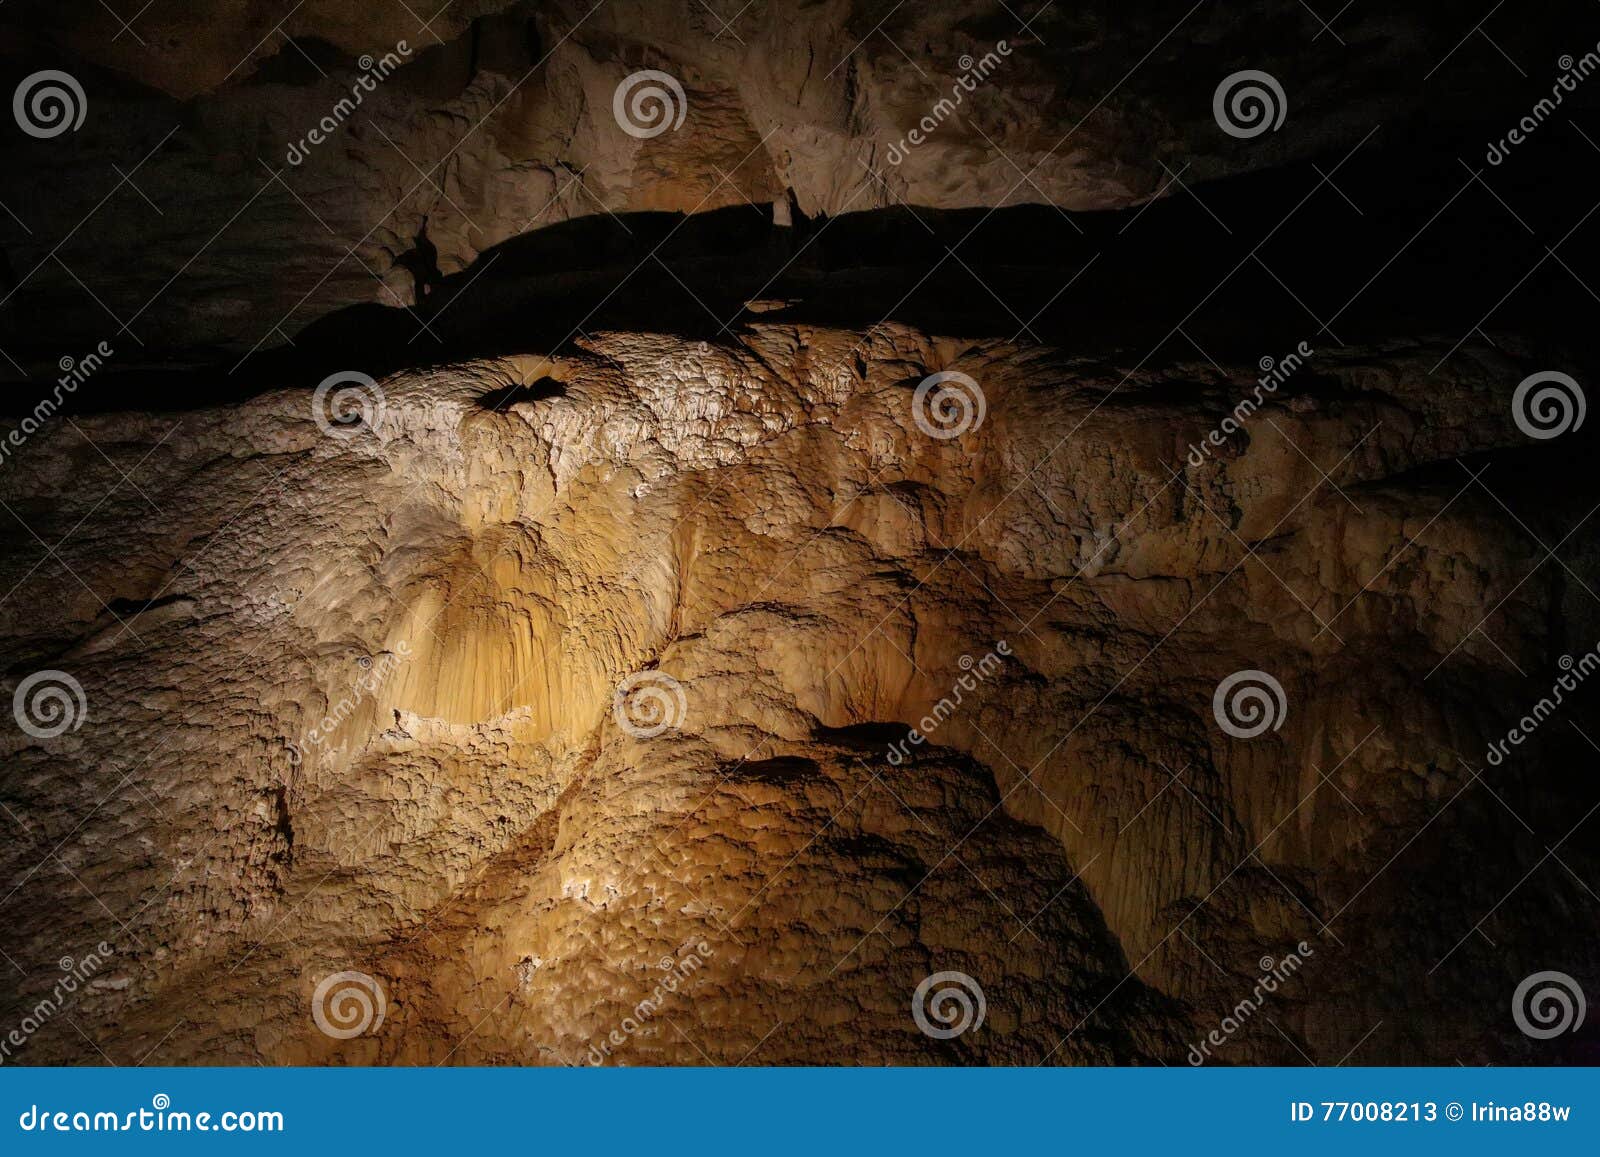 stalagmite rock formation in ruakuri cave, waitomo, nz